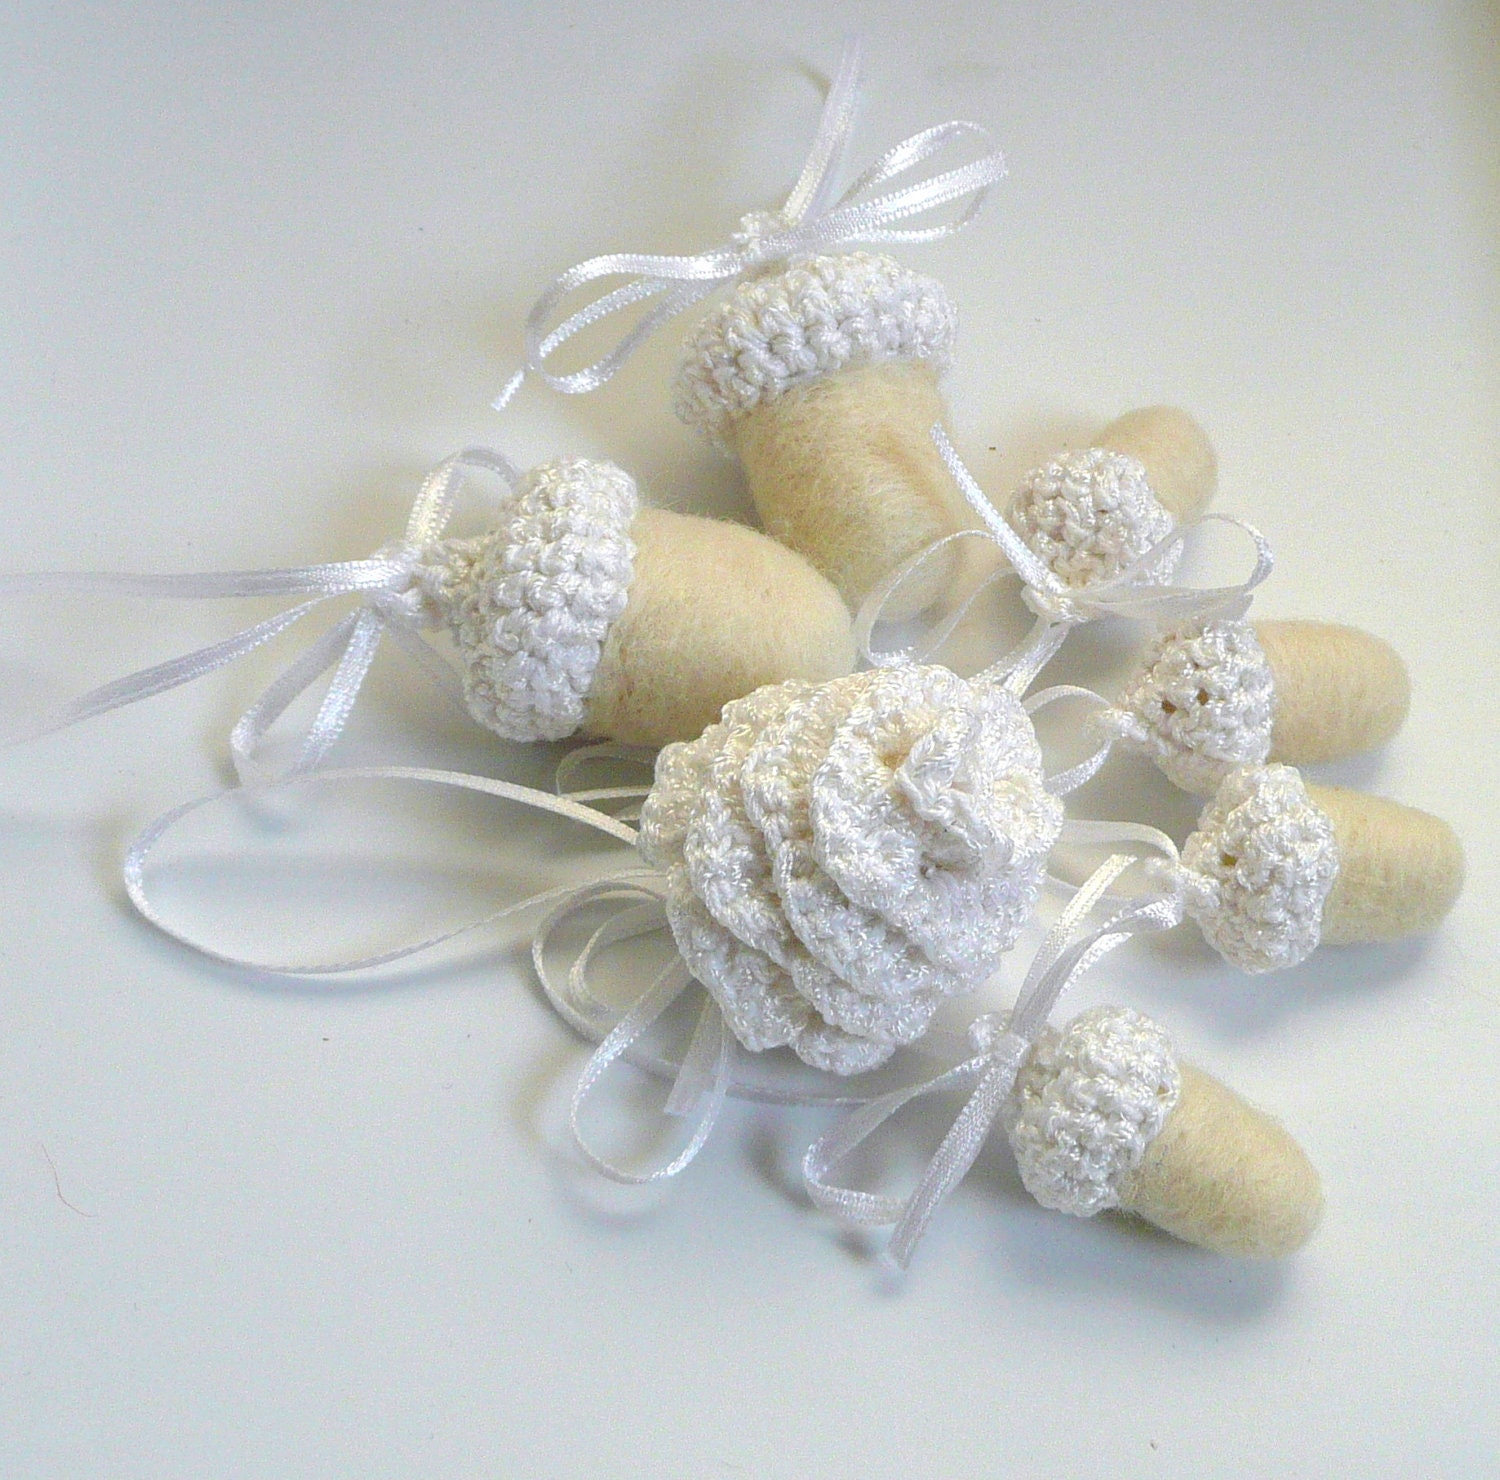 Snow white Weddings decor pine cone 4 white acorns and 2 big white acorns